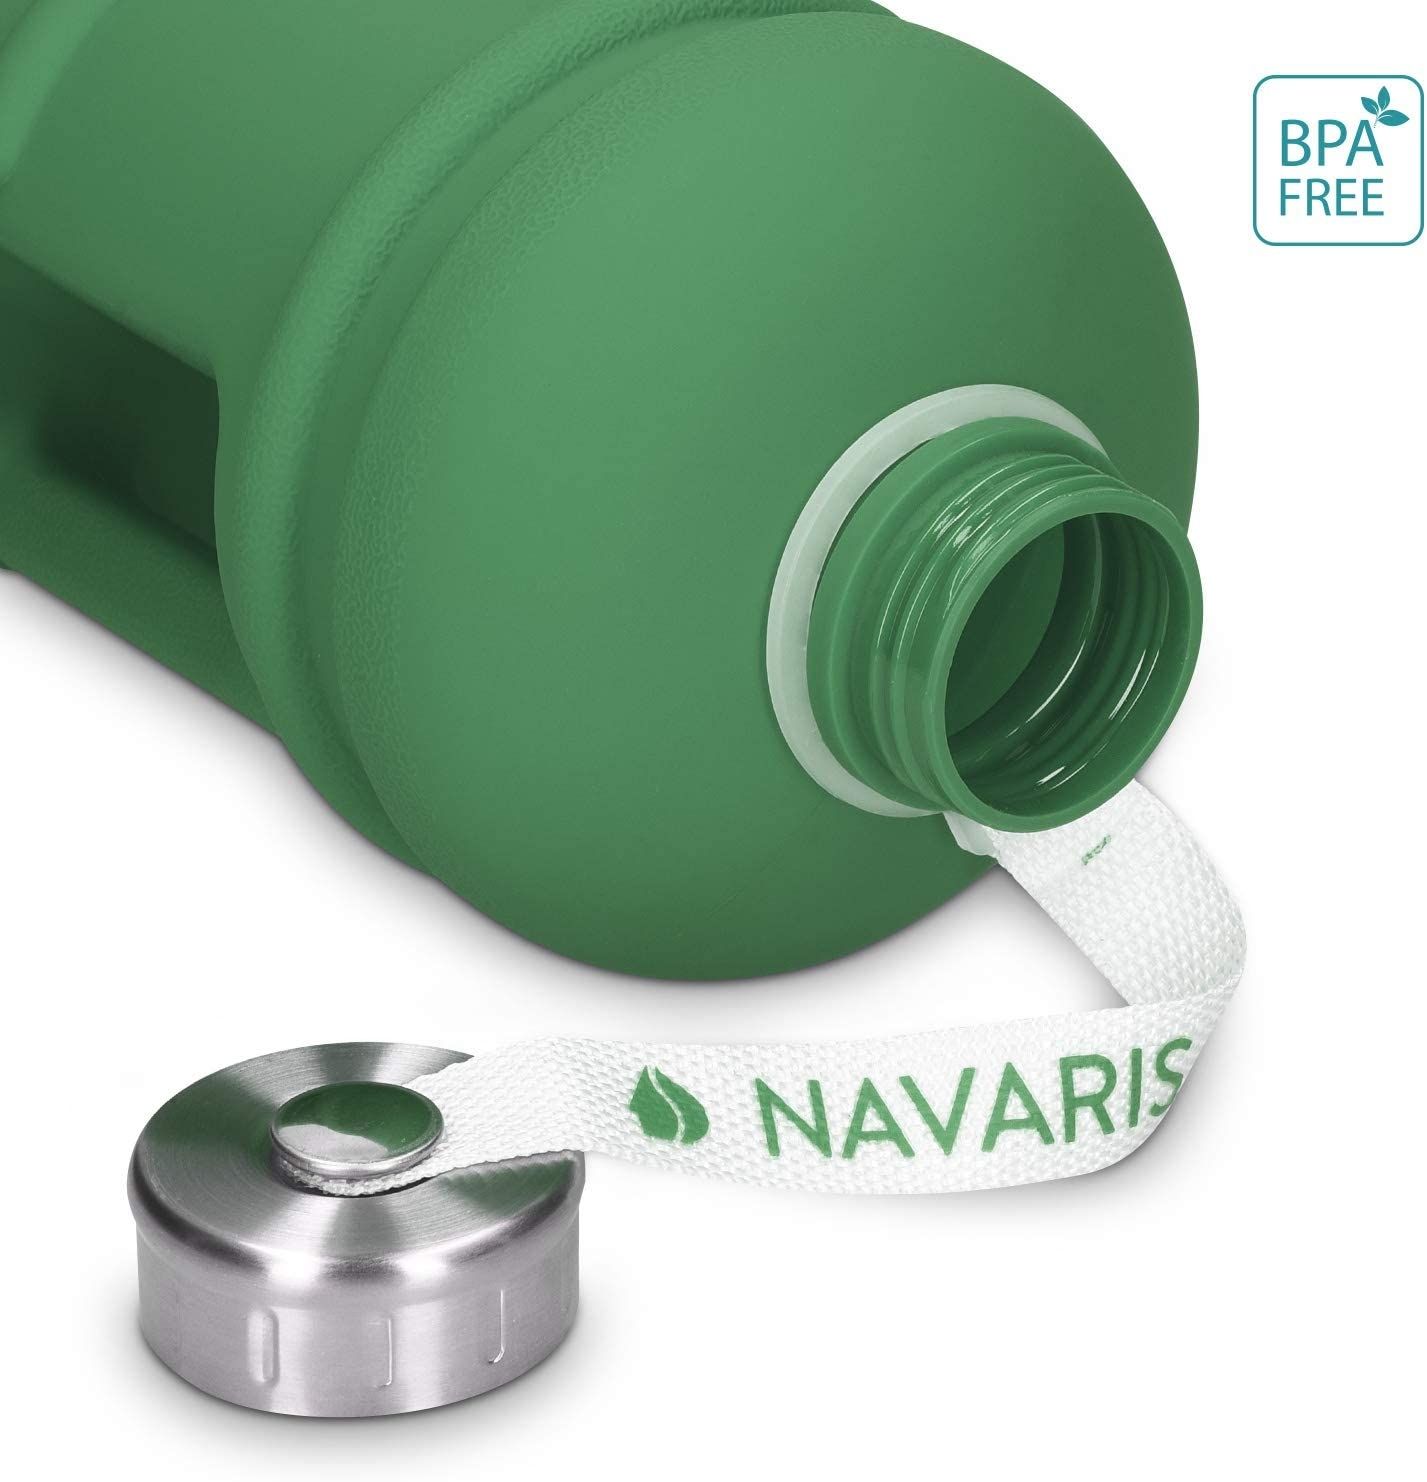 navaris-water-bottle-jug-boukali-nerou-apo-plastiko-tritan-bpa-free-2-2-l-green-2.jpg